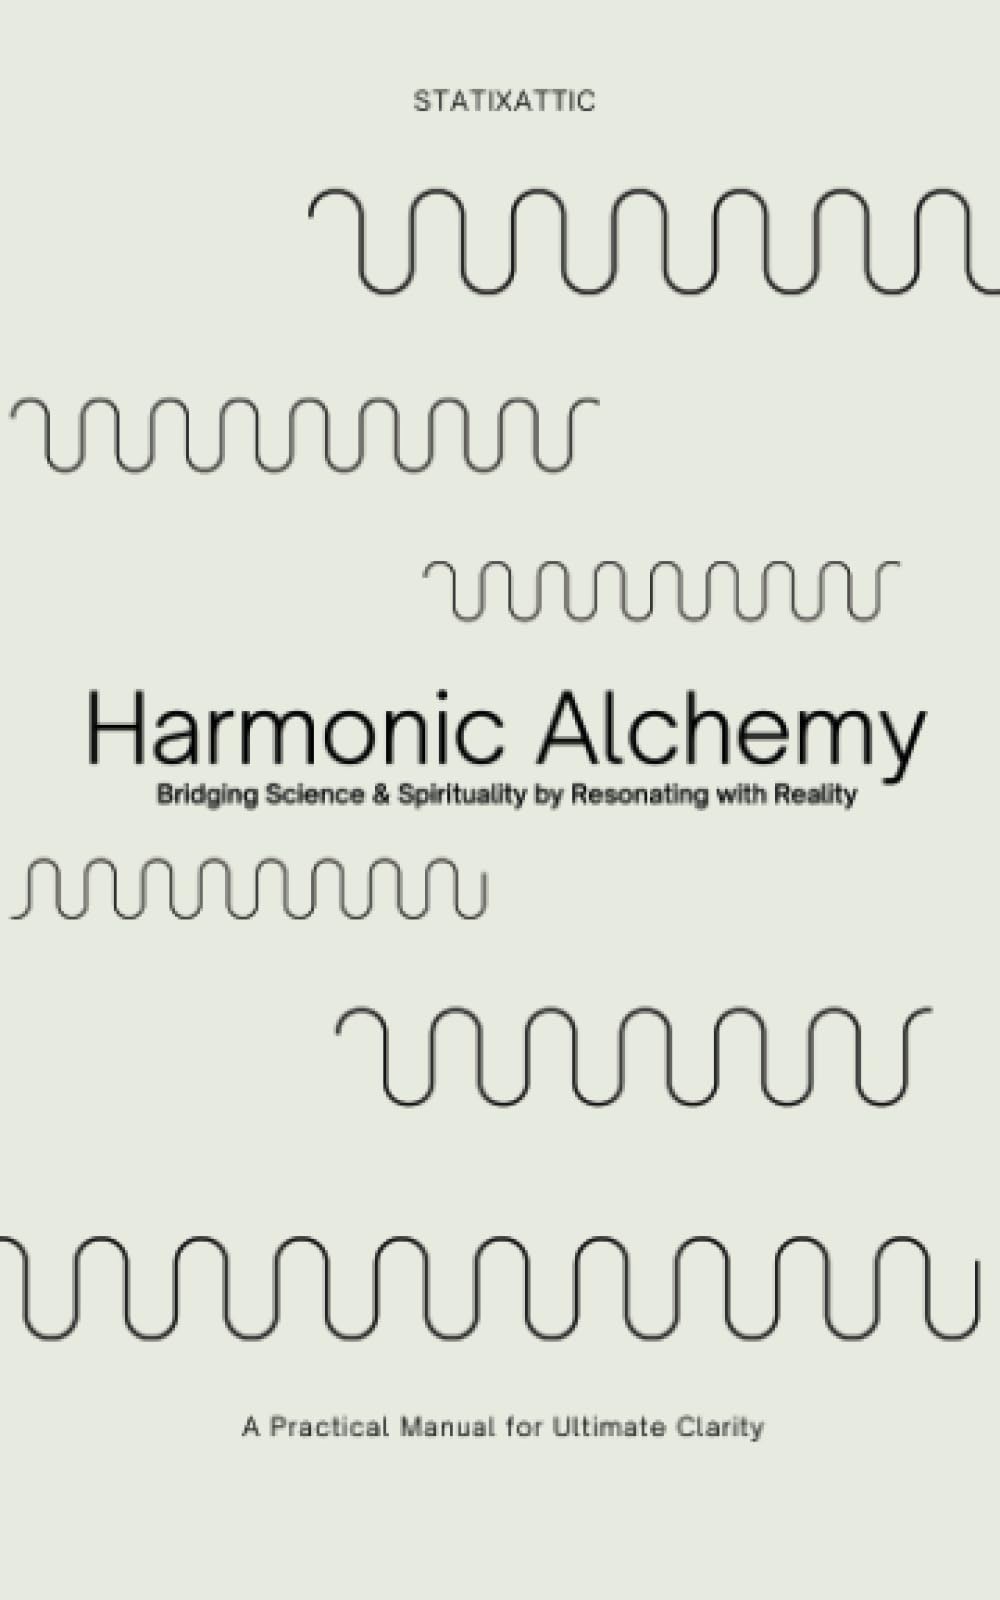 Harmonic Alchemy: Bridging Spirituality & Science by Resonating with Reality & Reason